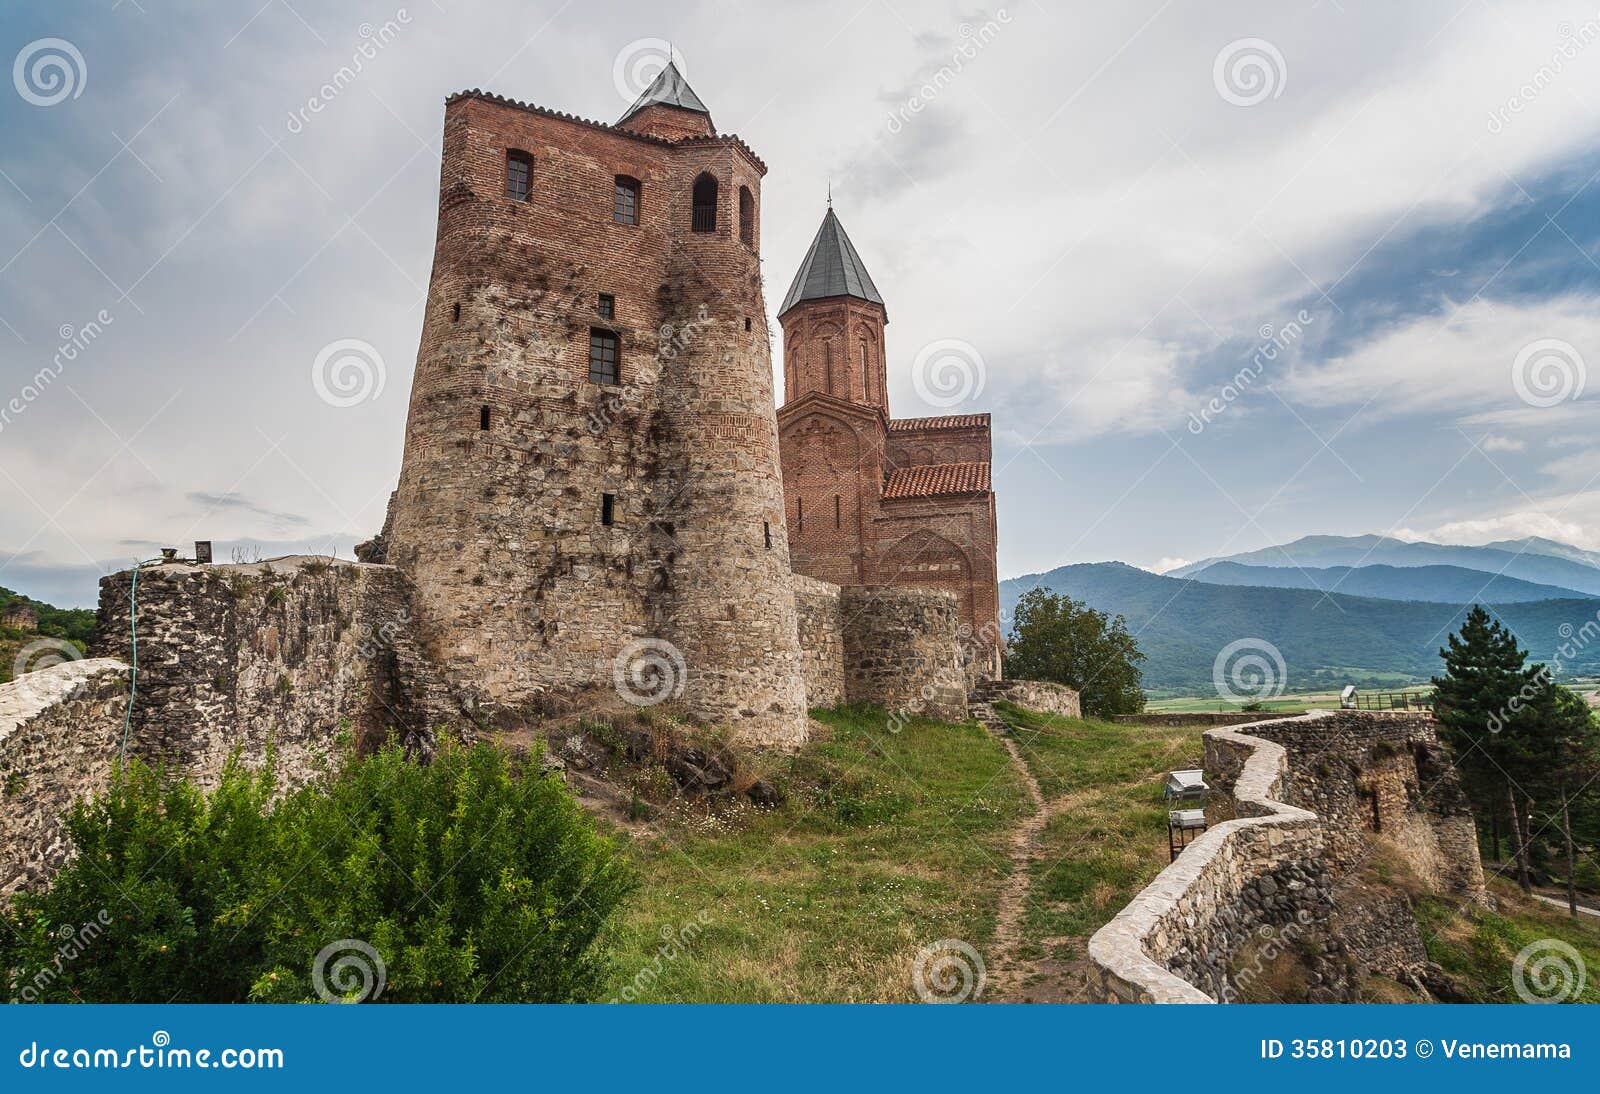 gremi, citadel and church of archangel in kakheti